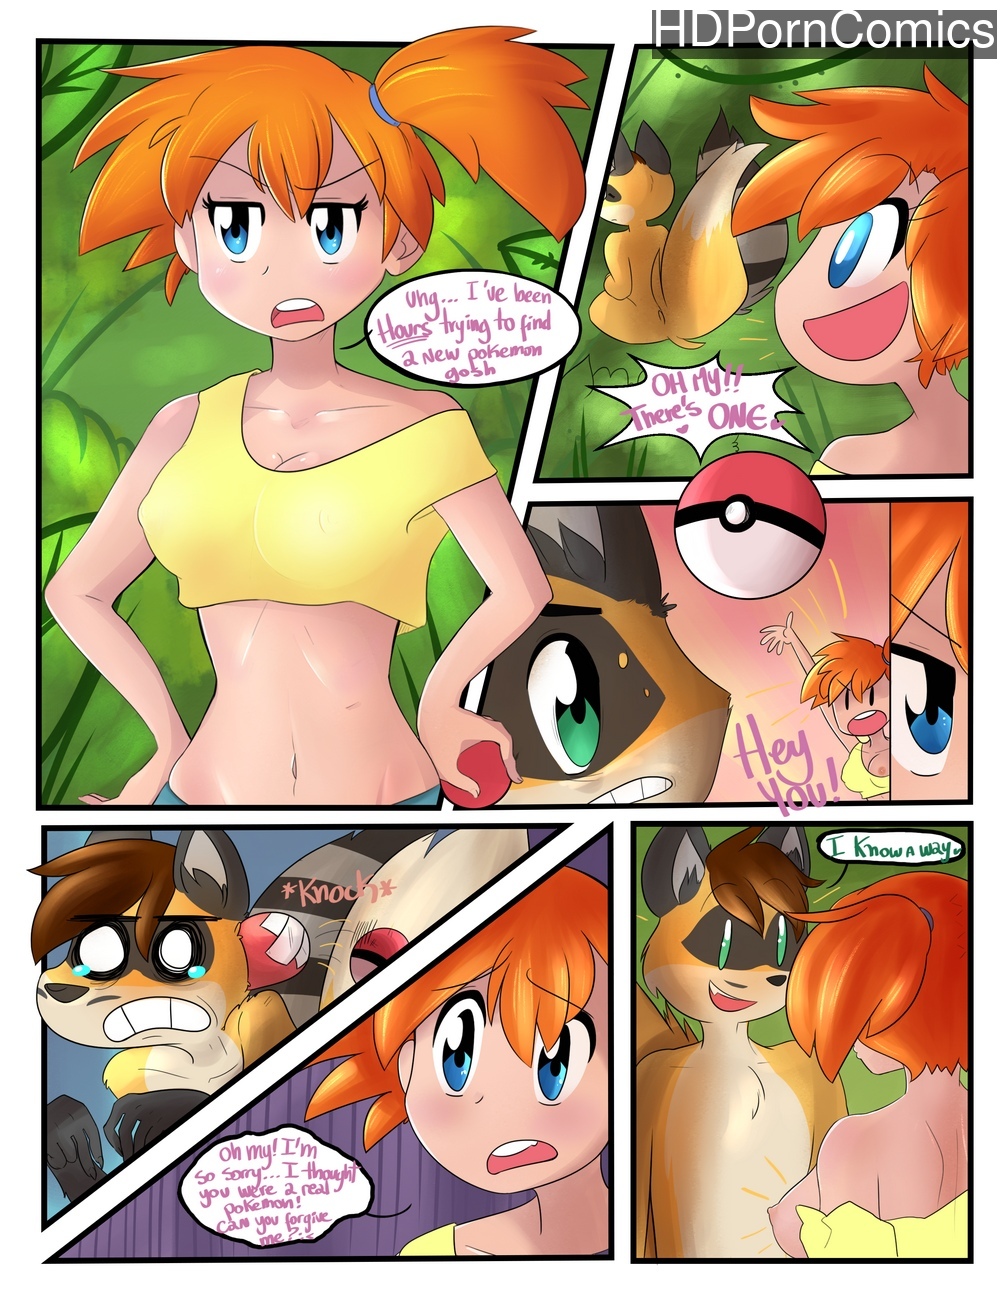 Misty Has Sex With Pokemon - Misty Catches Her Pokemon comic porn - HD Porn Comics